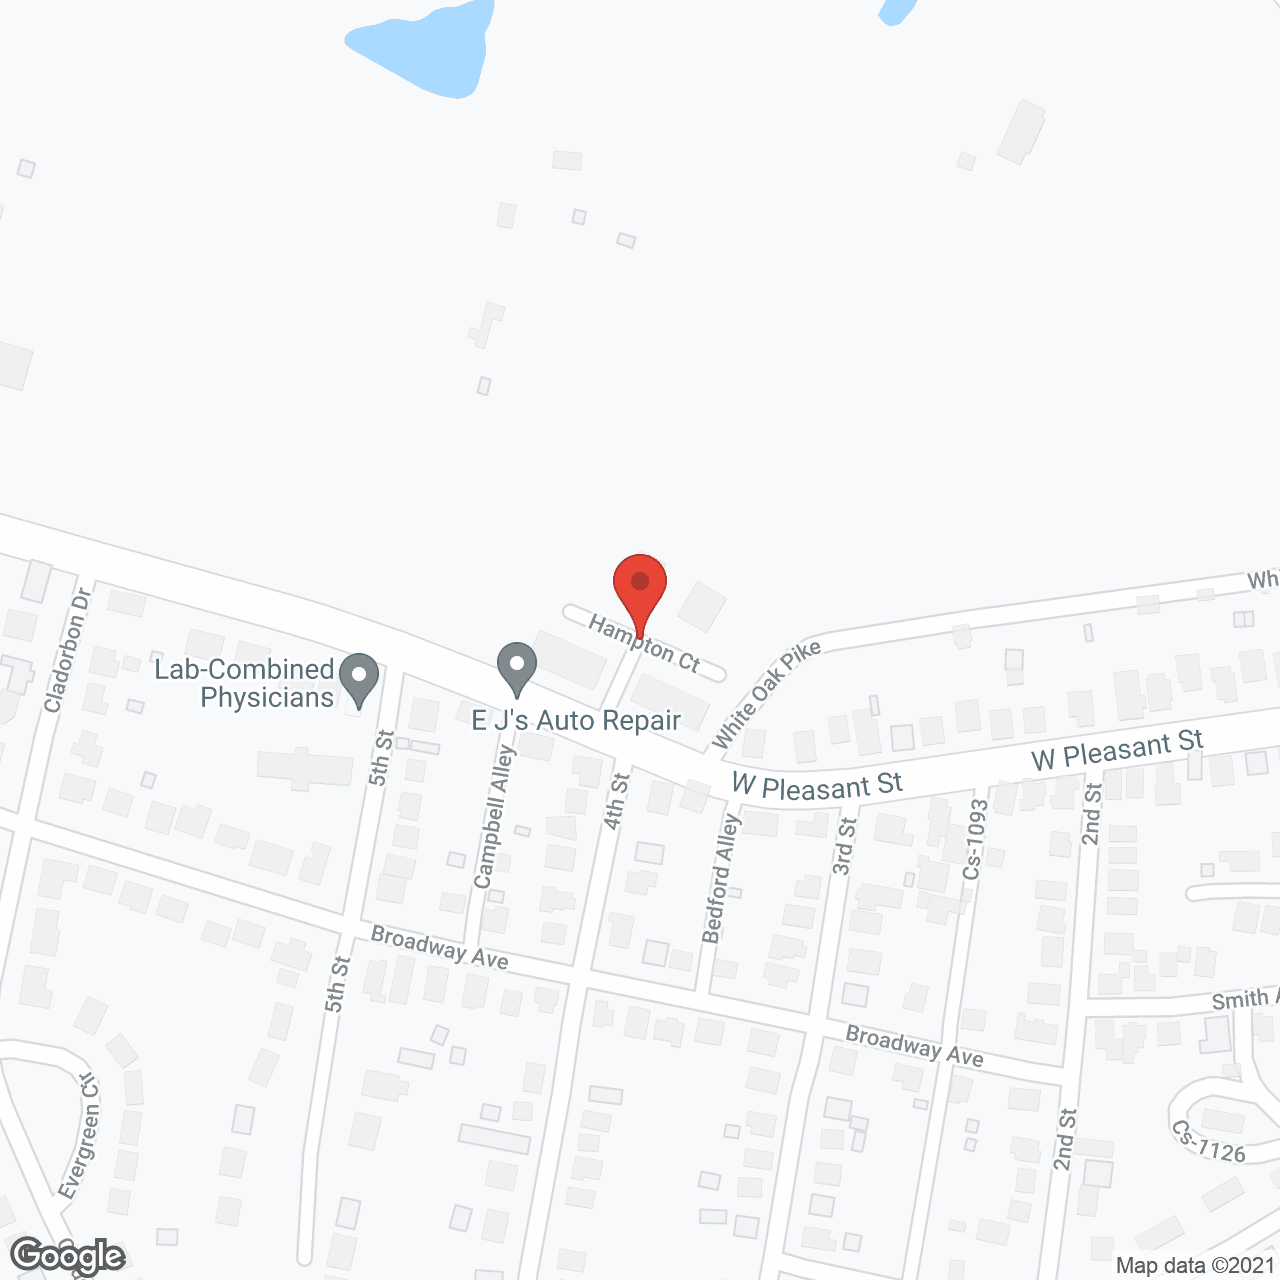 Belmont Senior Apartments in google map